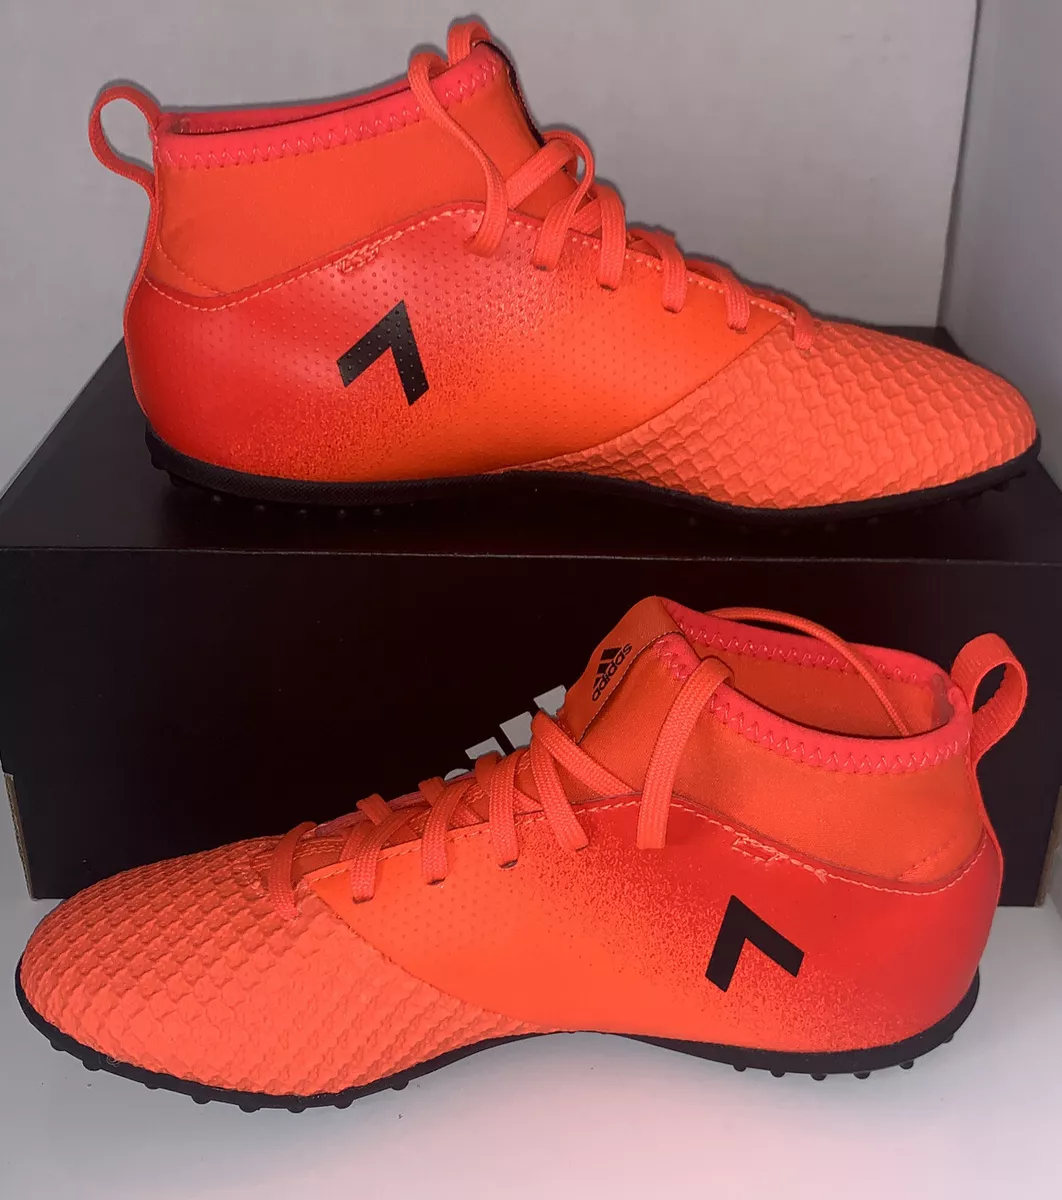 Arenoso algas marinas yeso Adidas Ace Tango 17.3 TF Jr turf soccer shoes Sz 3.5 red/blk/orn BY2205 |  eBay